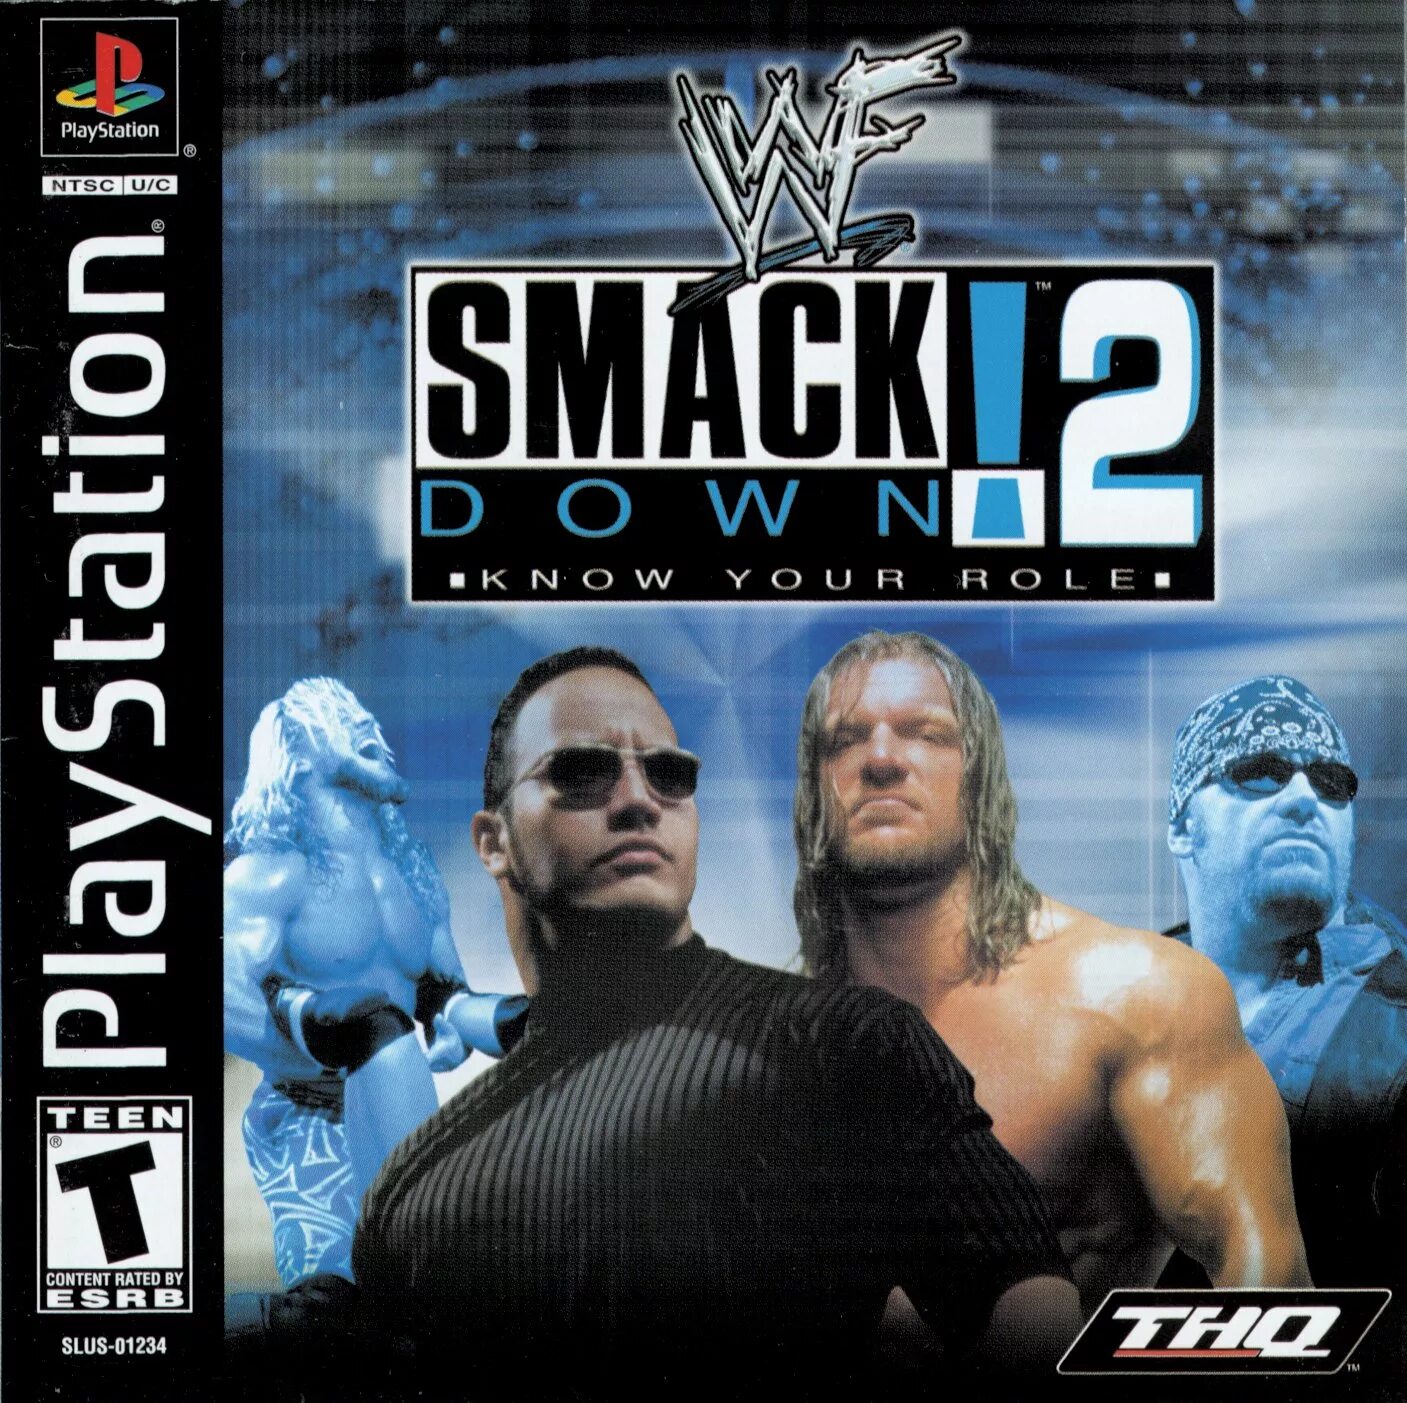 Реслинг на сони плейстейшен 1. Sony PLAYSTATION 1 WWF SMACKDOWN 2. WWE SMACKDOWN 2 ps1. Реслинг сени плейстейшн 1. Smack down